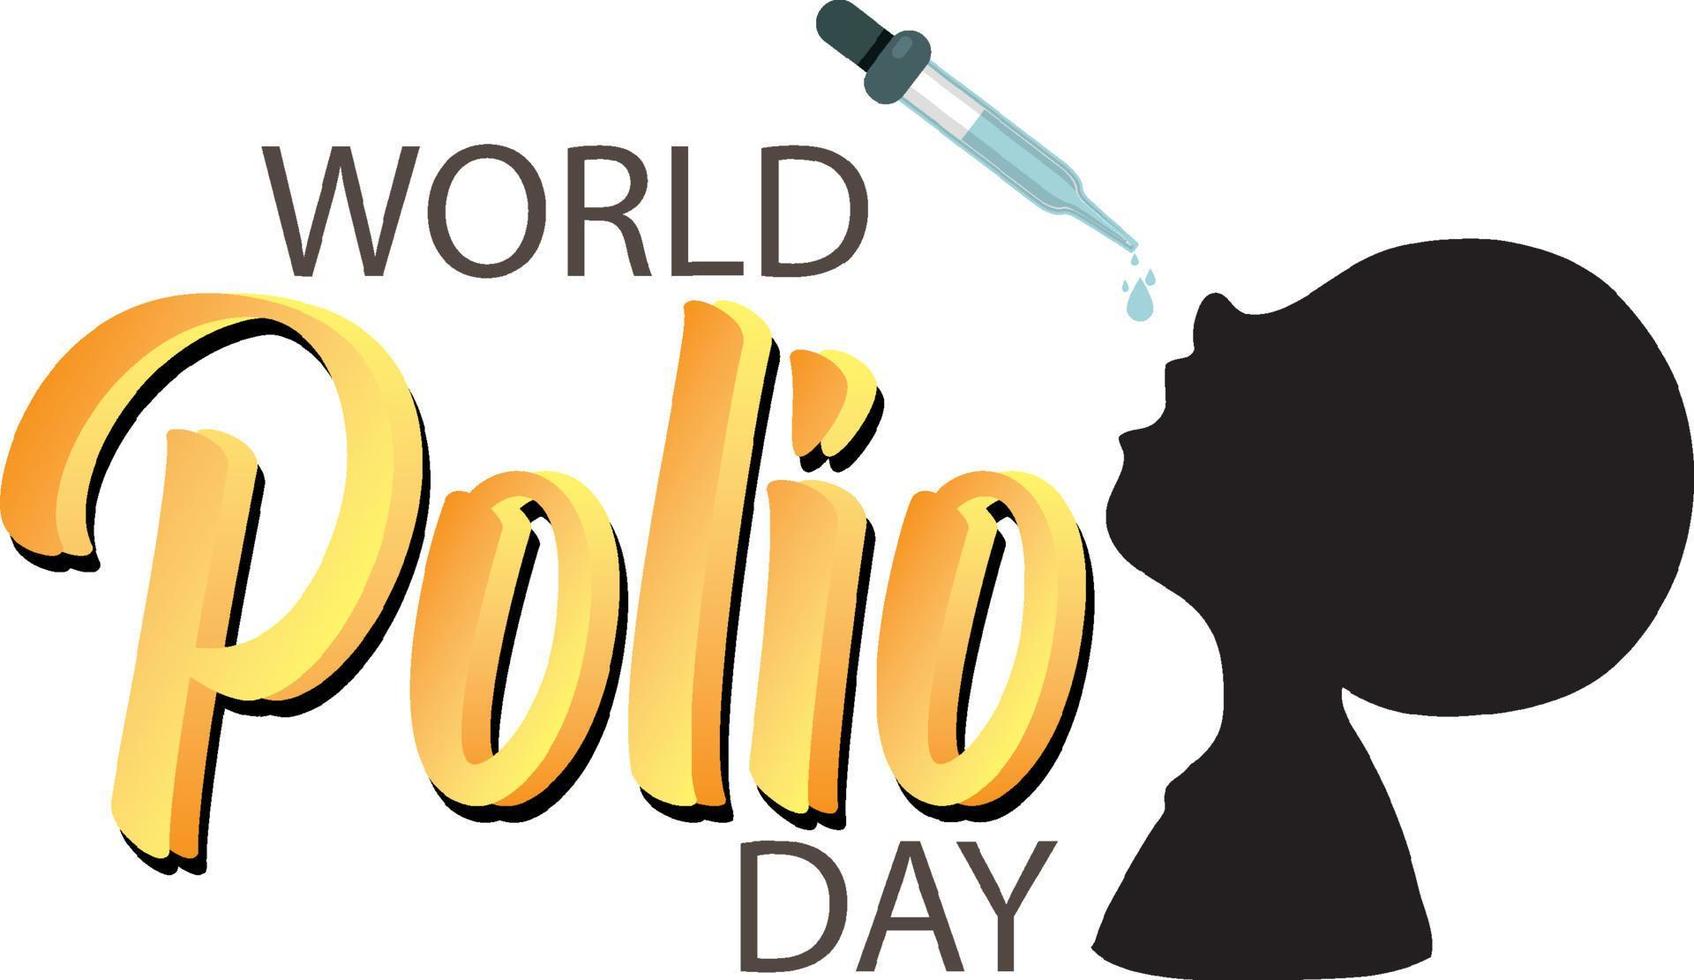 World Polio Day poster design with oral poliovirus vaccine vector